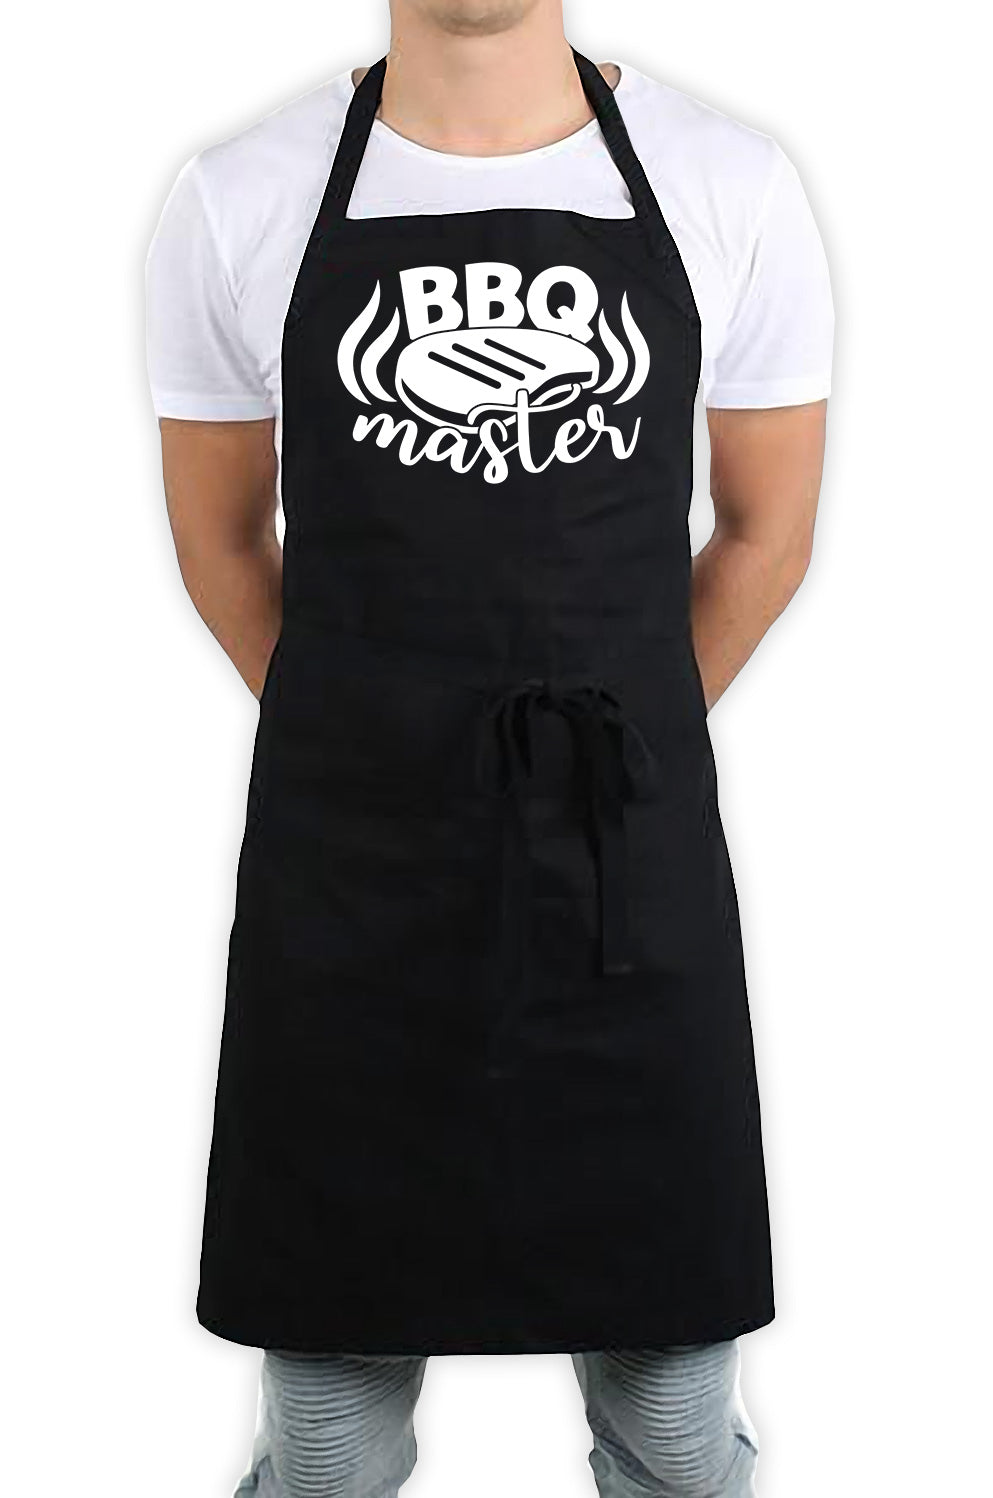 BBQ Master Funny Kitchen BBQ Apron Black